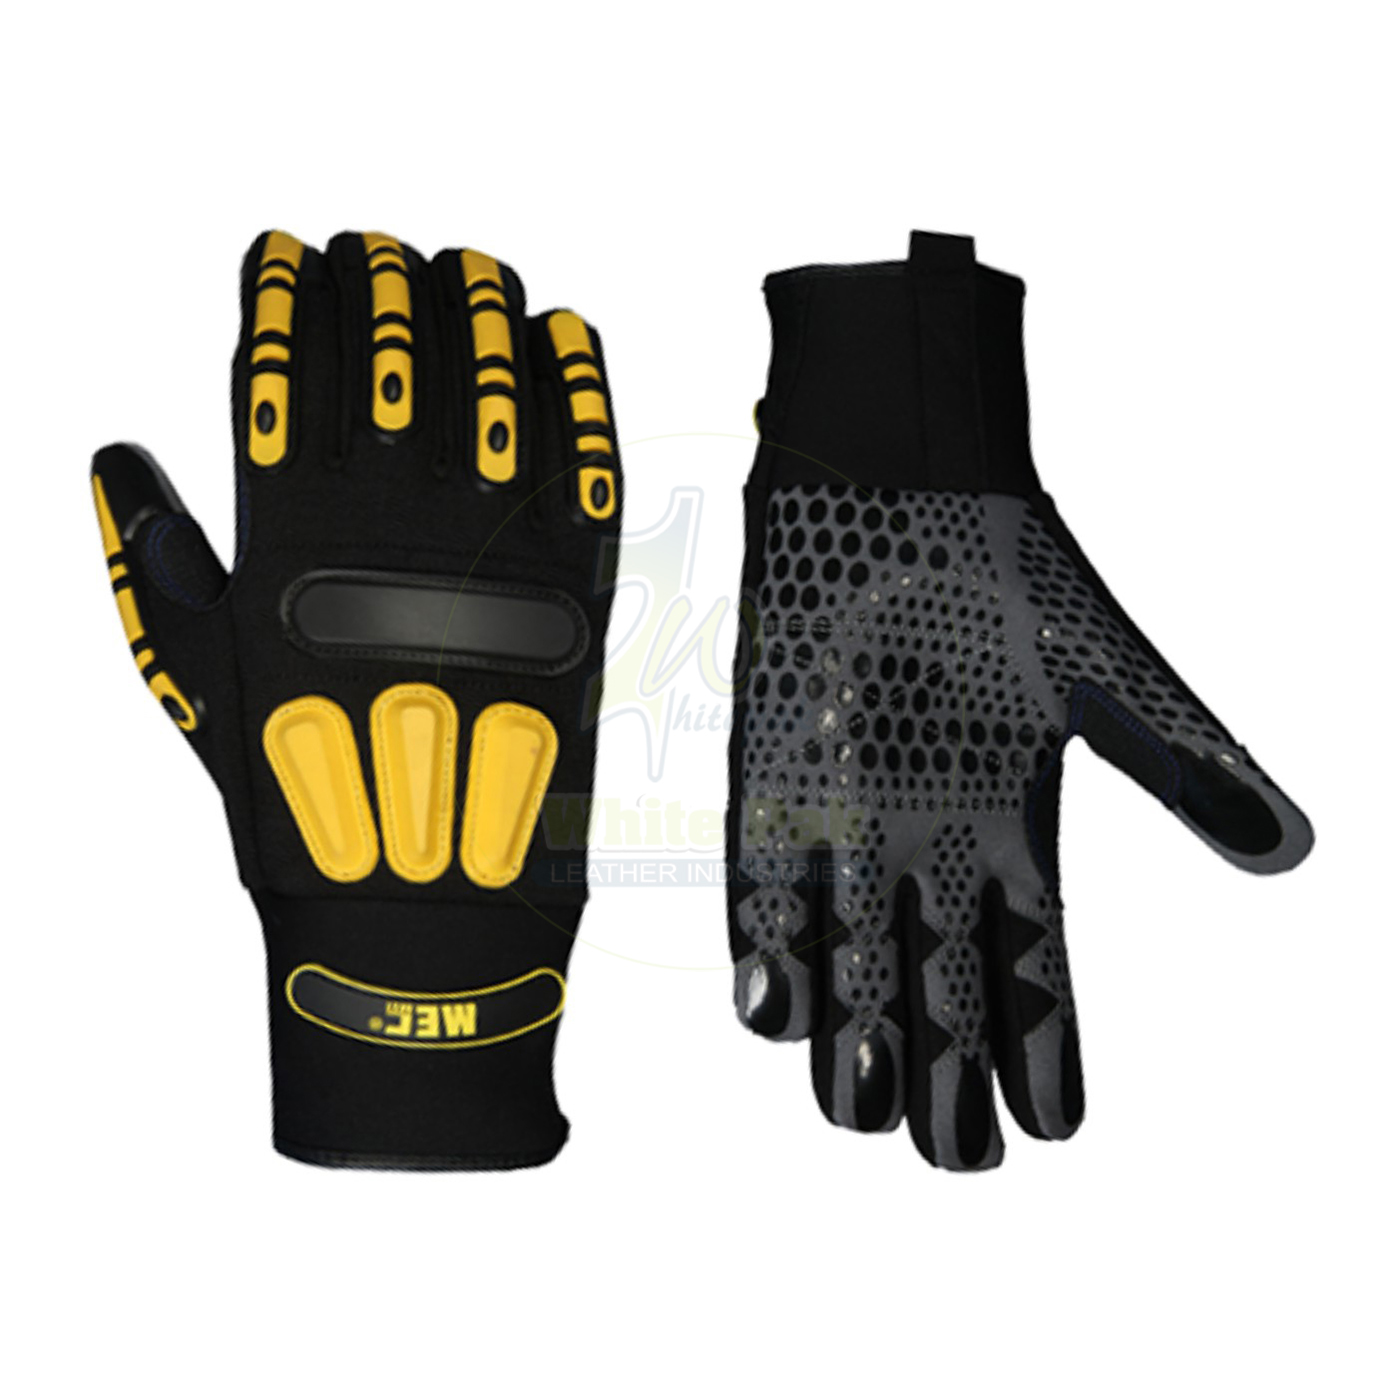 Impact Protection Mechanics Gloves